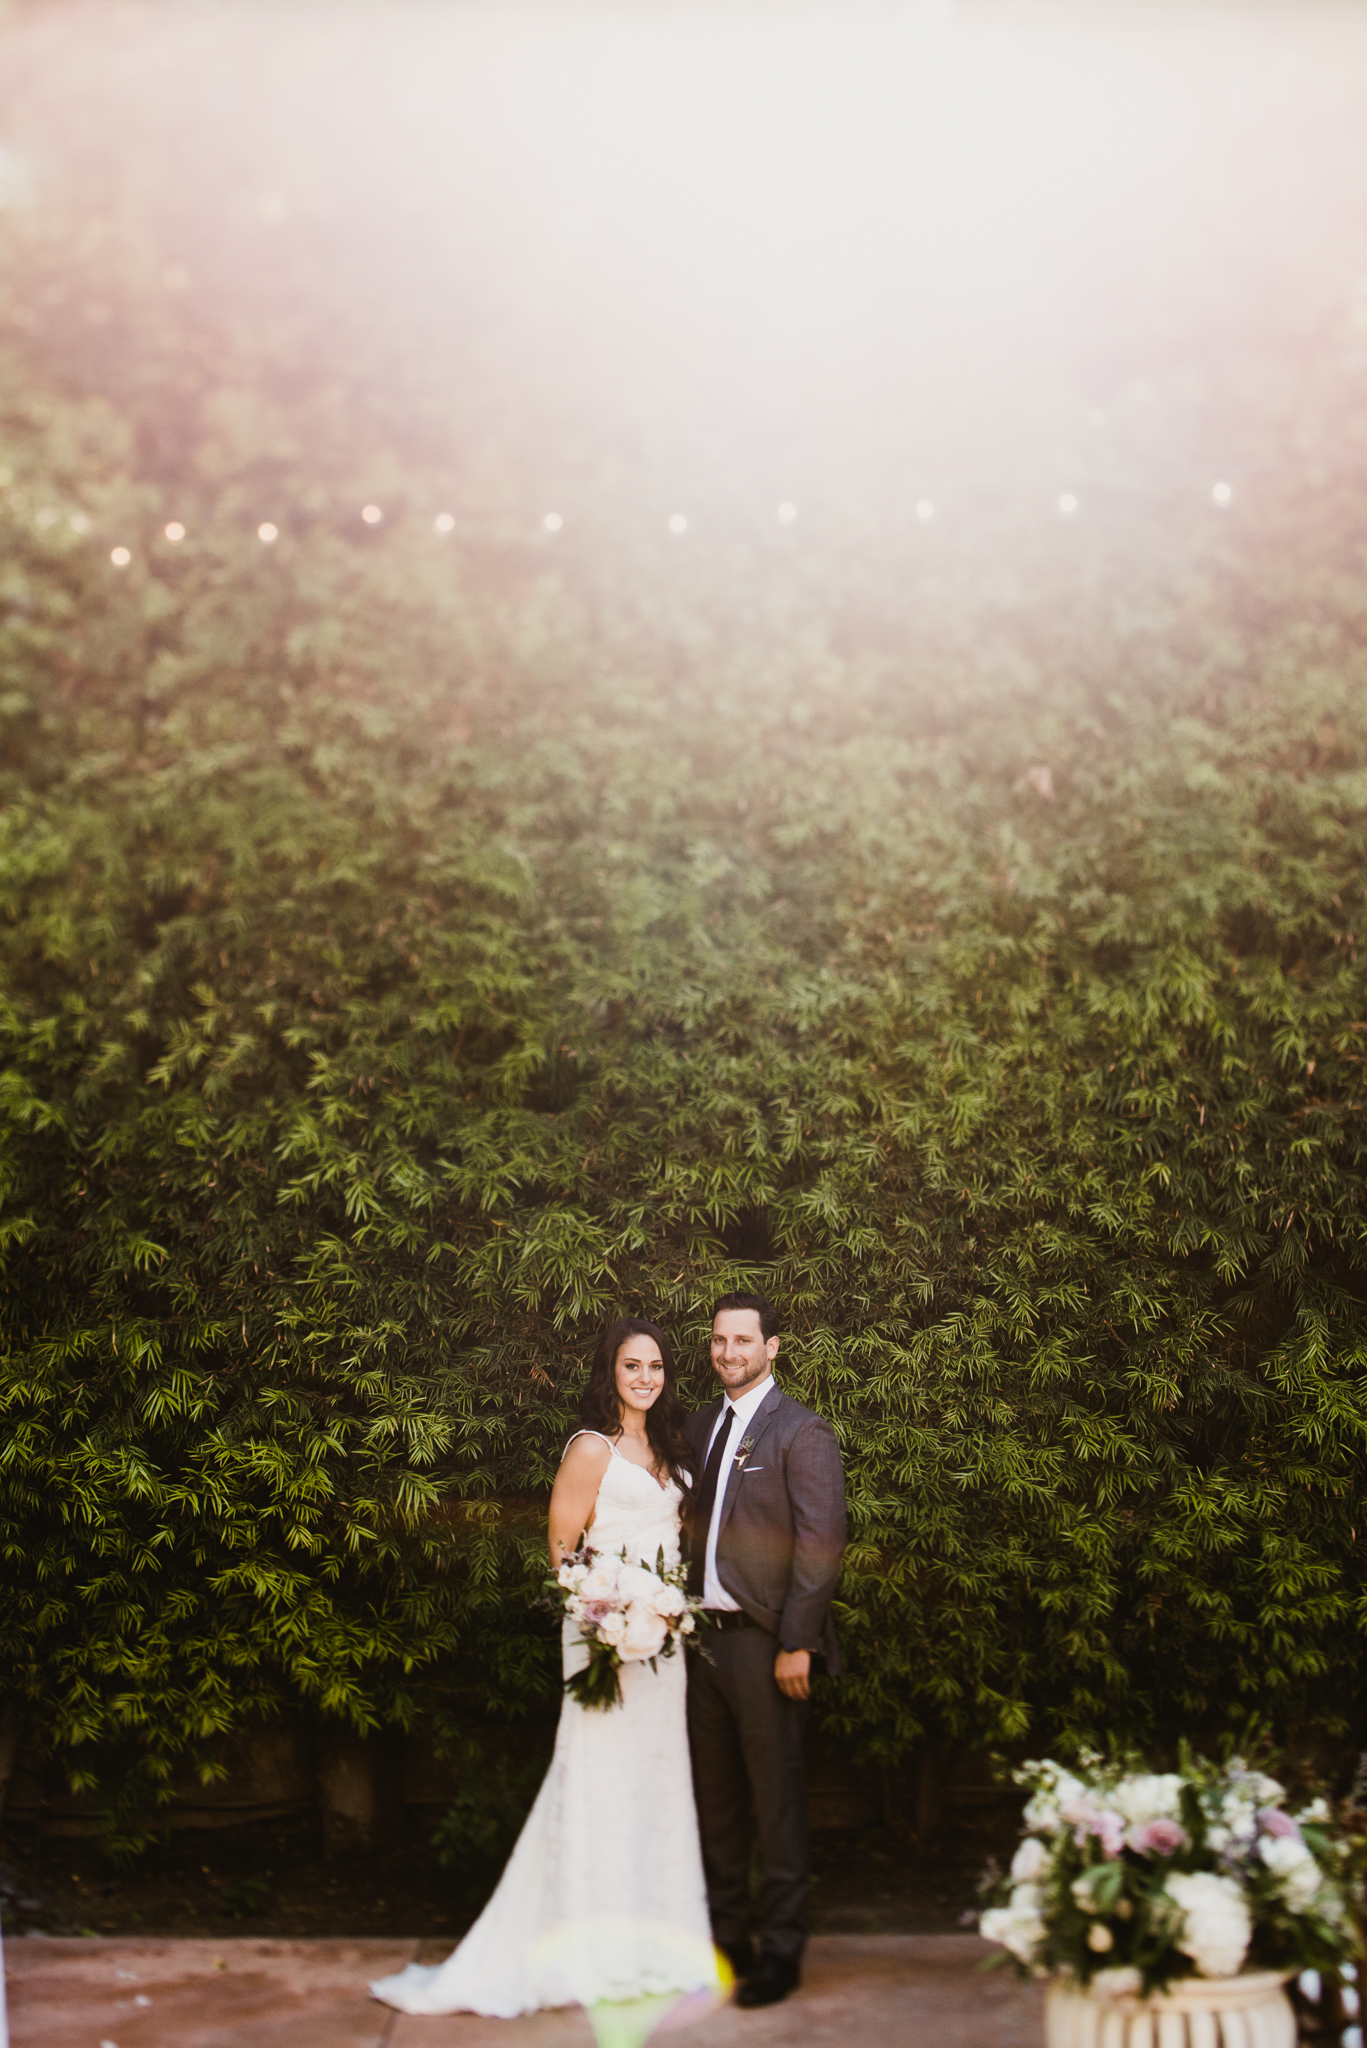 ©Isaiah & Taylor Photography - Franciscan Gardens Wedding Venue, San Juan Capistrano -55.jpg